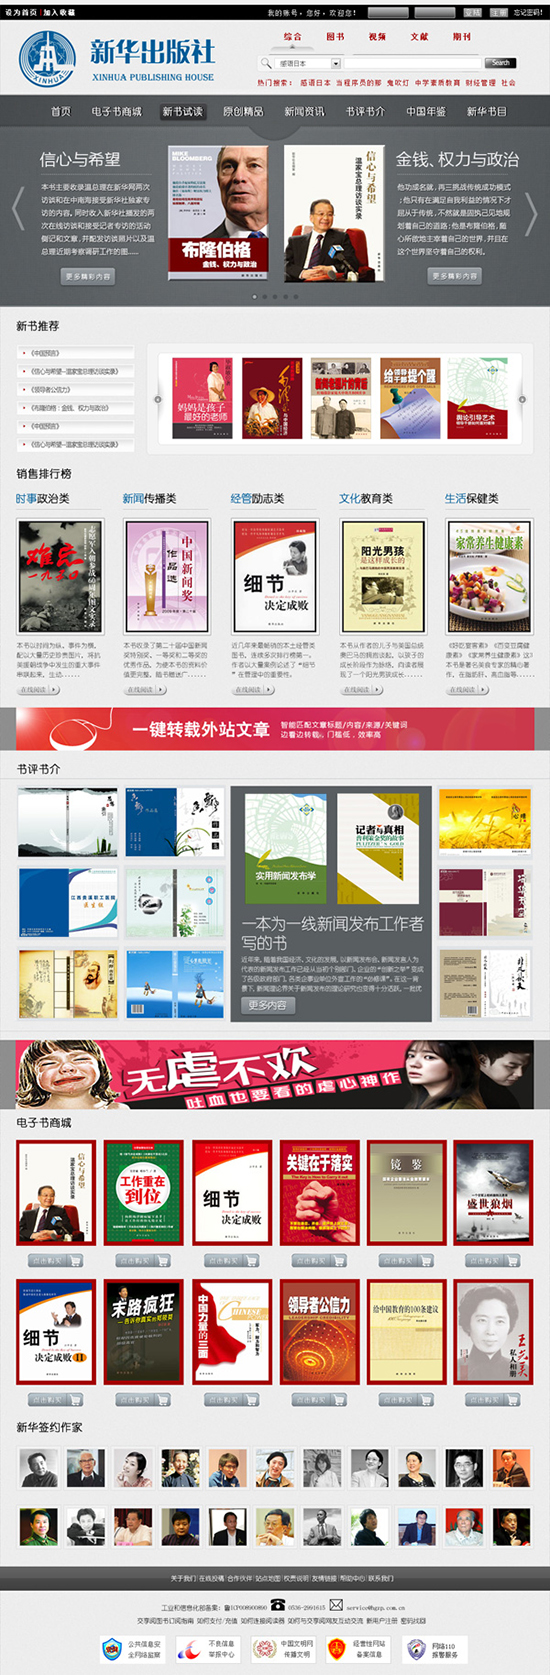 Xinhua editorial plantilla psd de casa sitio web